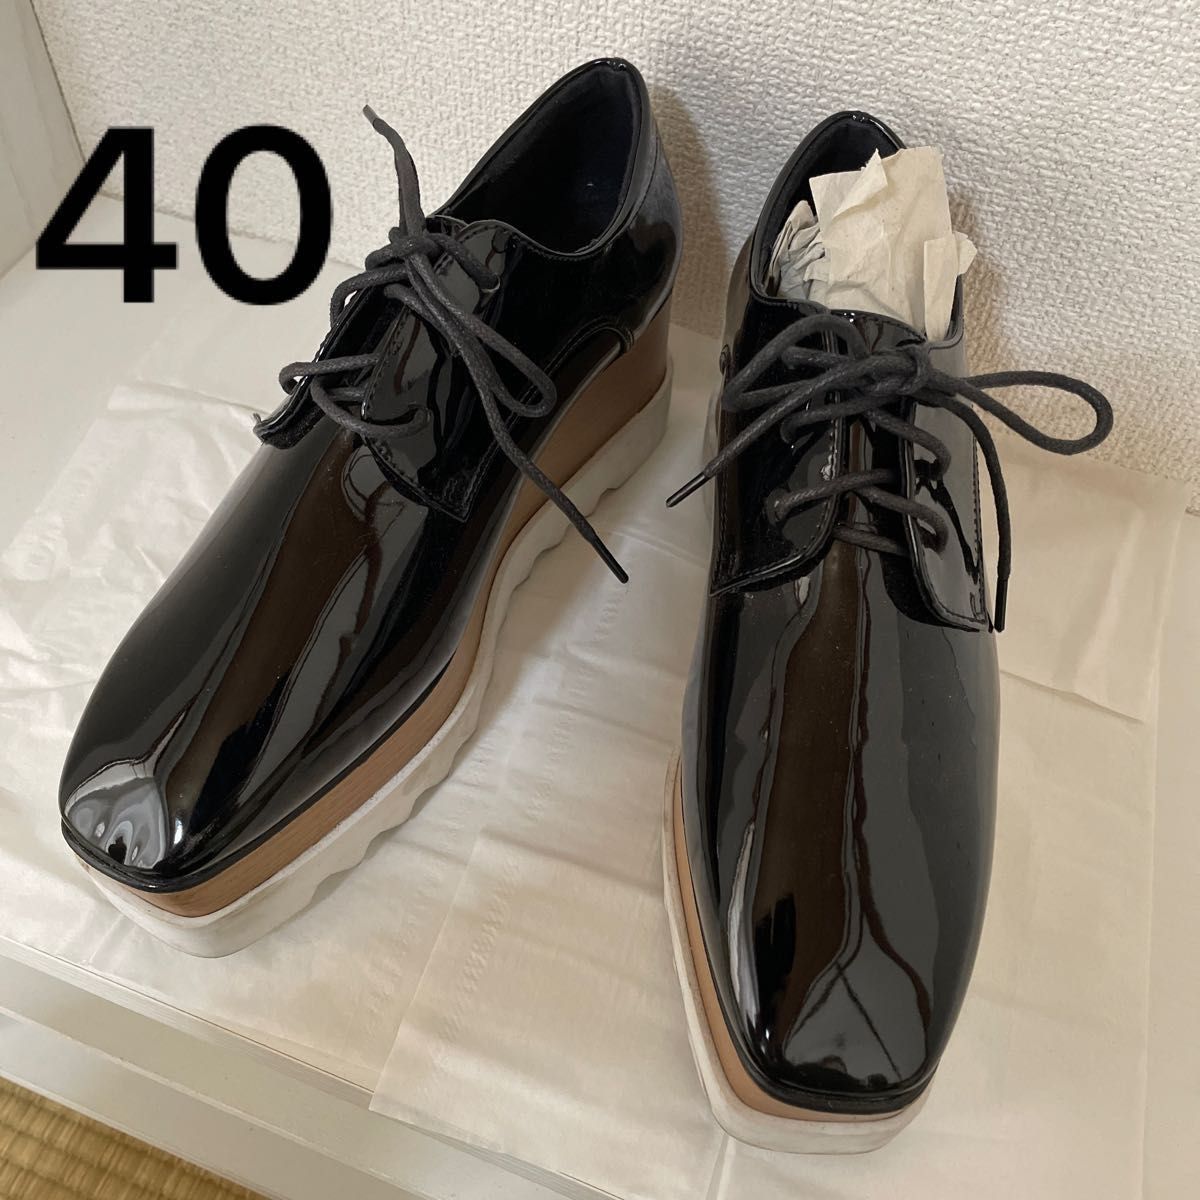 DAIYAER レディース シューズ 靴 厚底 ローファー エナメル ブラウン ブラック 紐靴 40 大きいサイズ